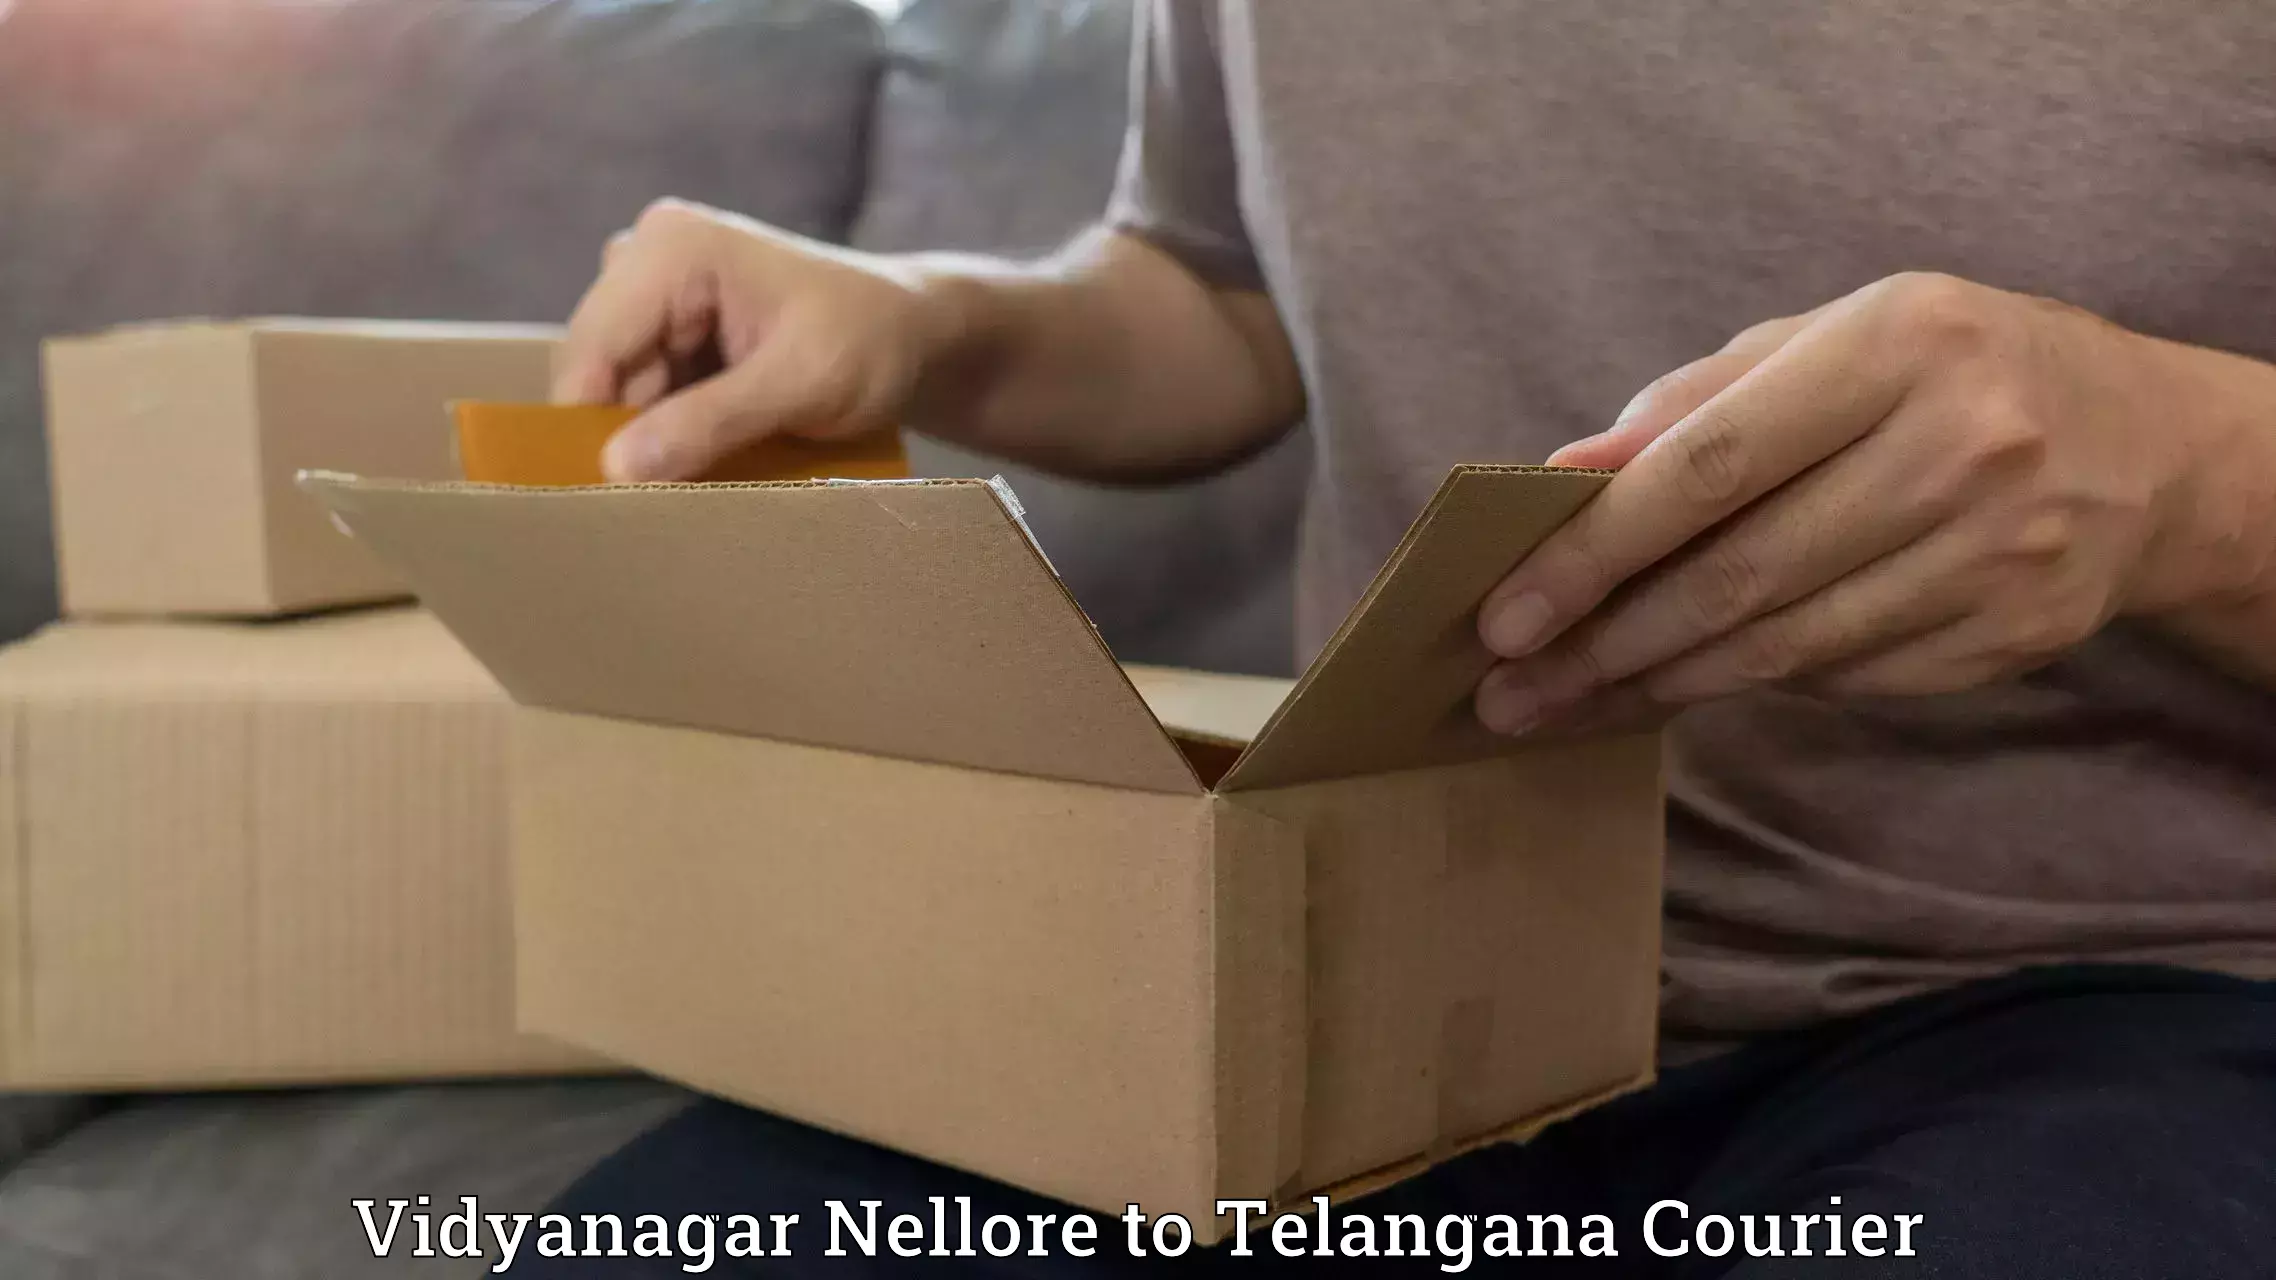 Courier service partnerships Vidyanagar Nellore to Yellareddy